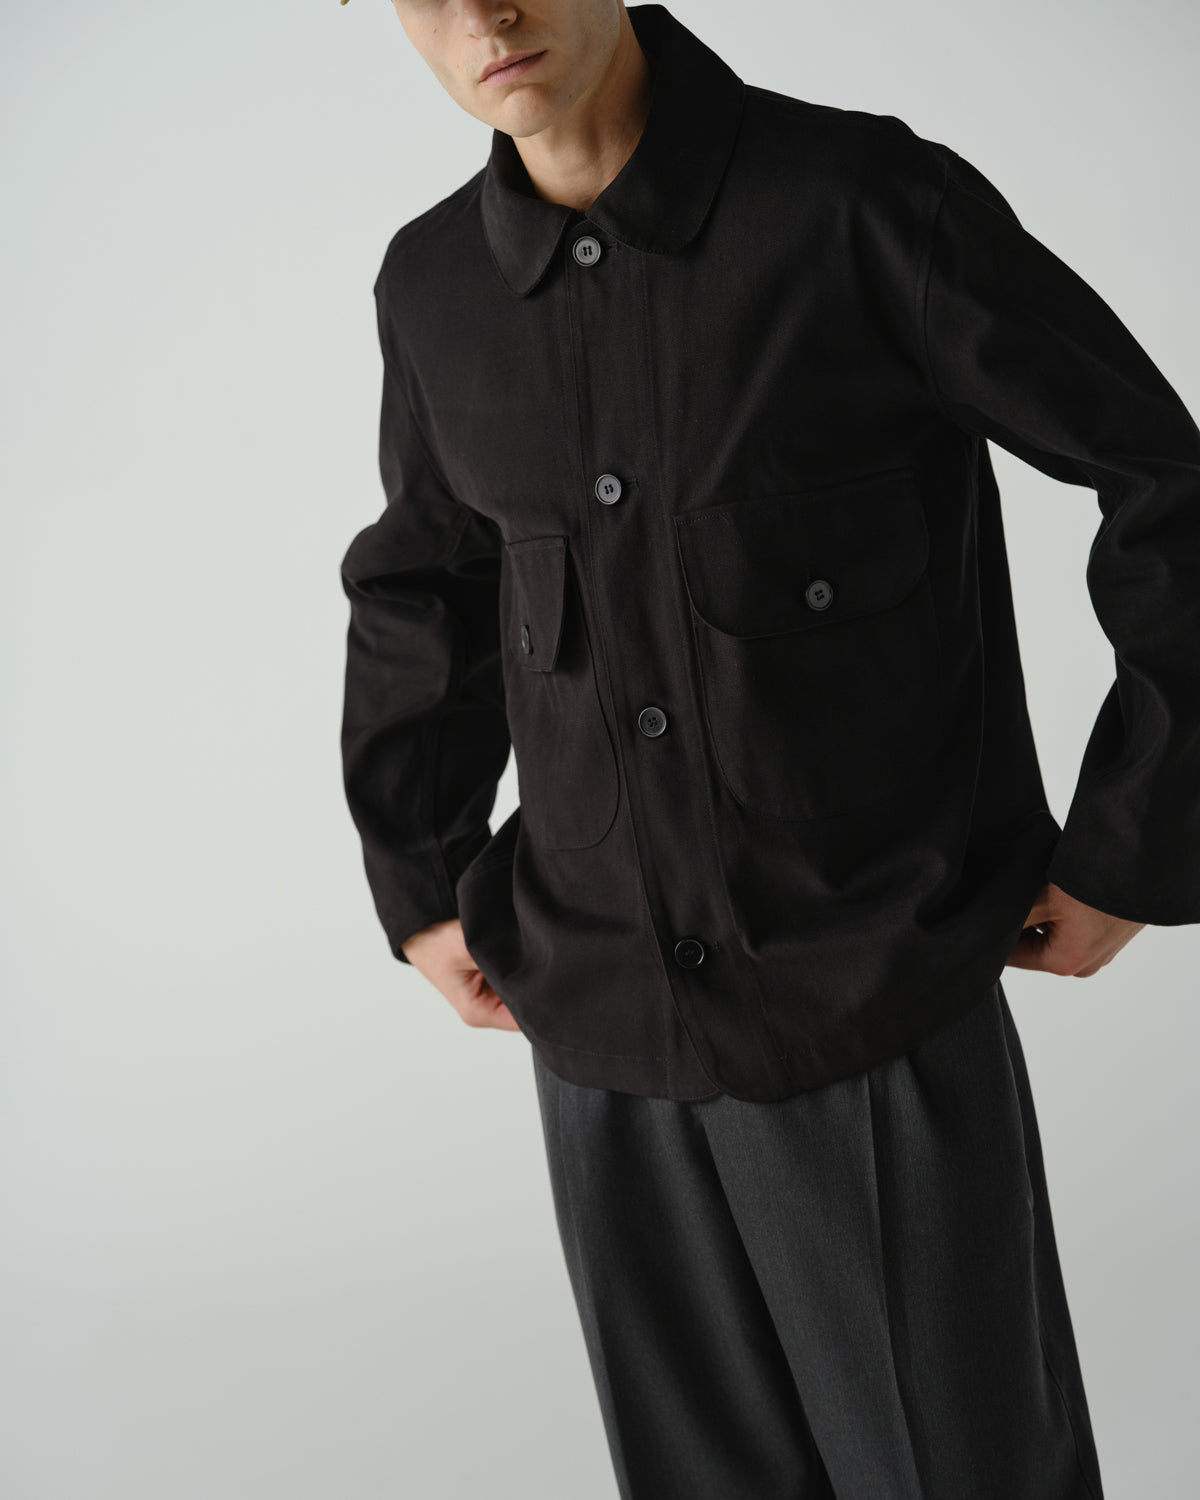 Close up of male model wearing the big pocket jacket in black